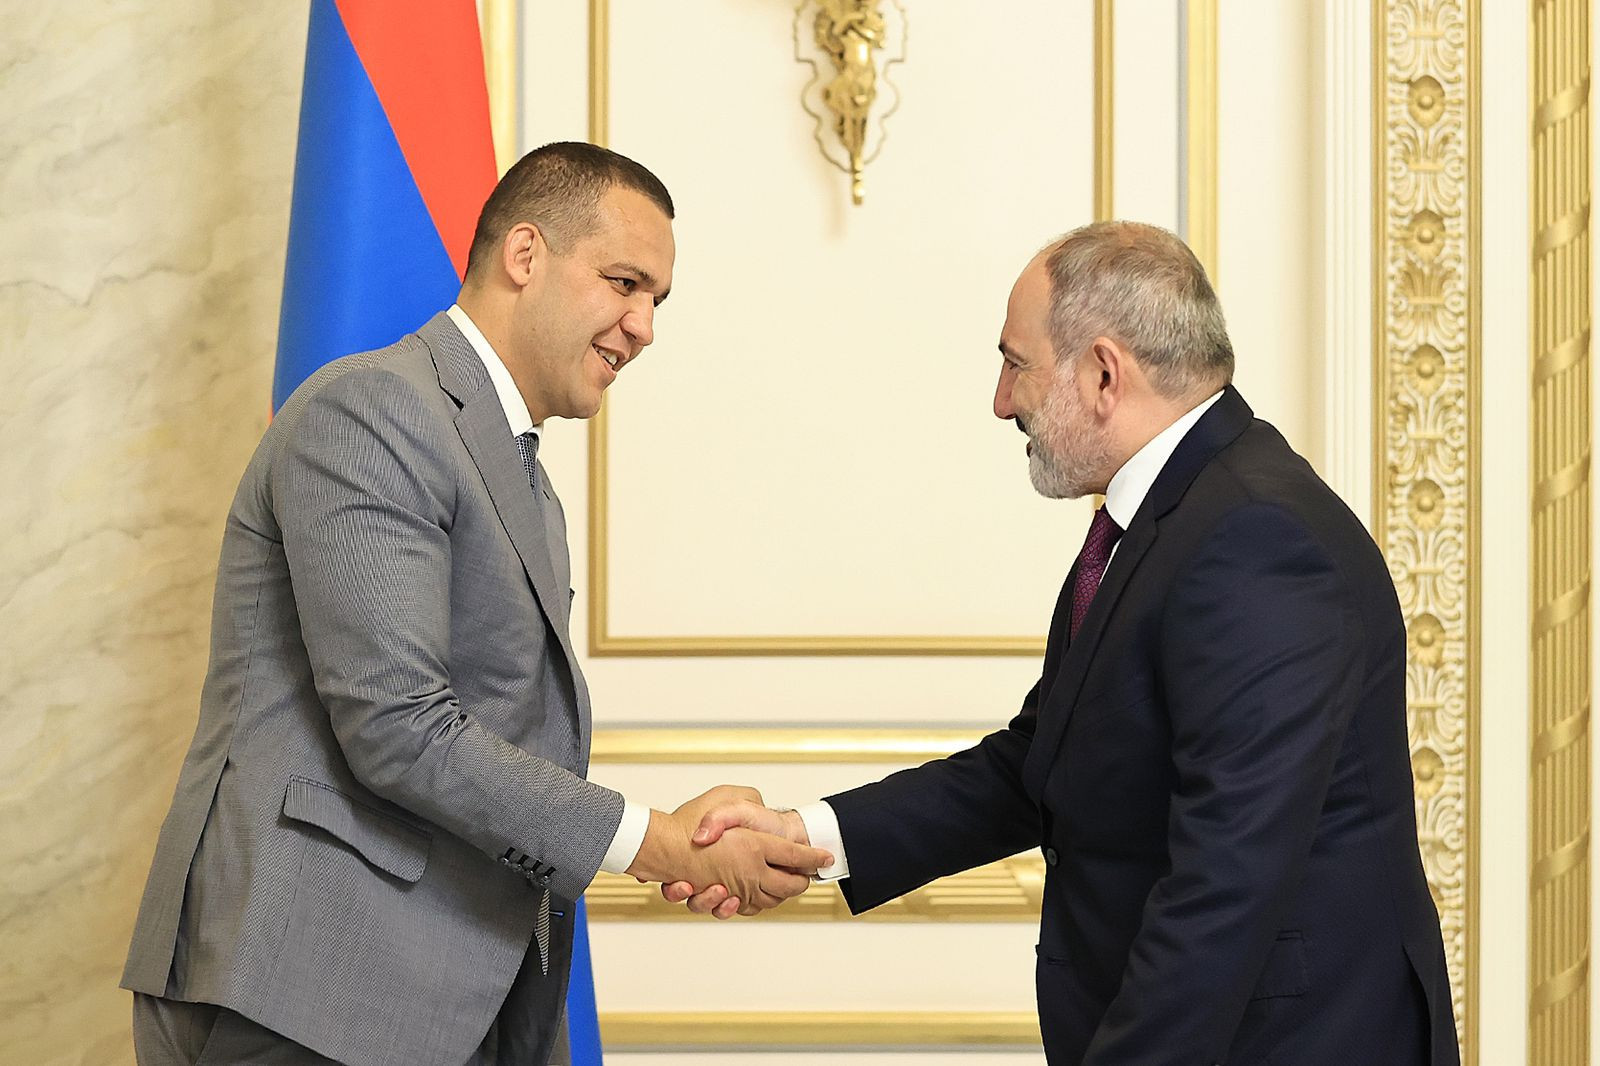 IBA President Umar Kremlev met Armenia's Prime Minister Nikol Pashinyan, right, during a visit to Armenia's capital in May ©IBA